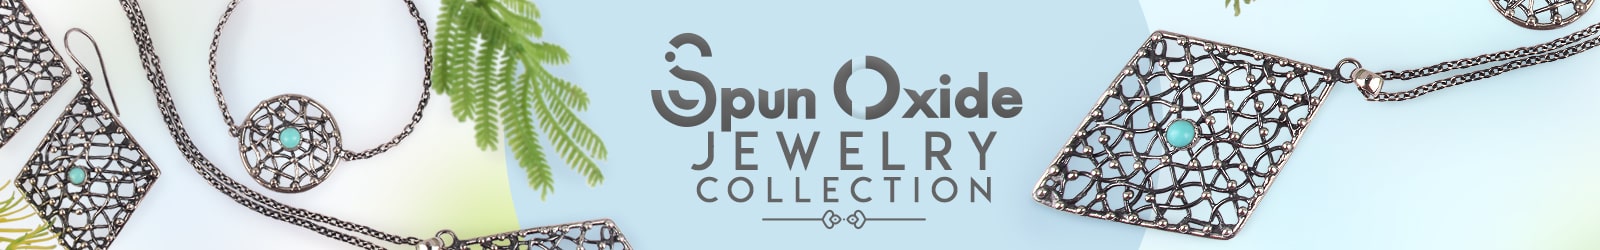 Spun Oxide Jewelry Manufacturer